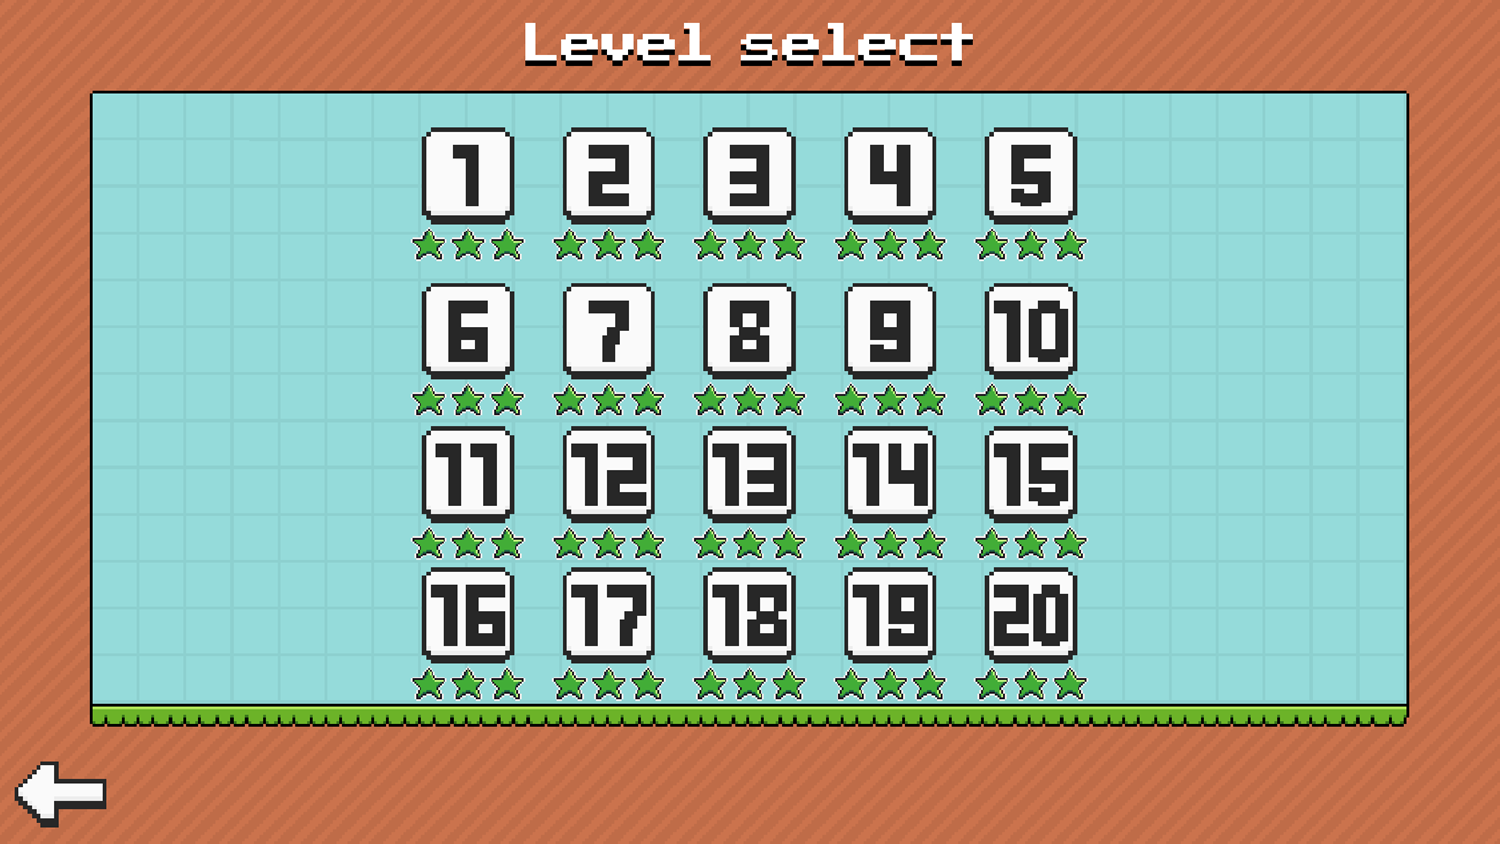 Duck Auto Run Game Level Select Screen Screenshot.